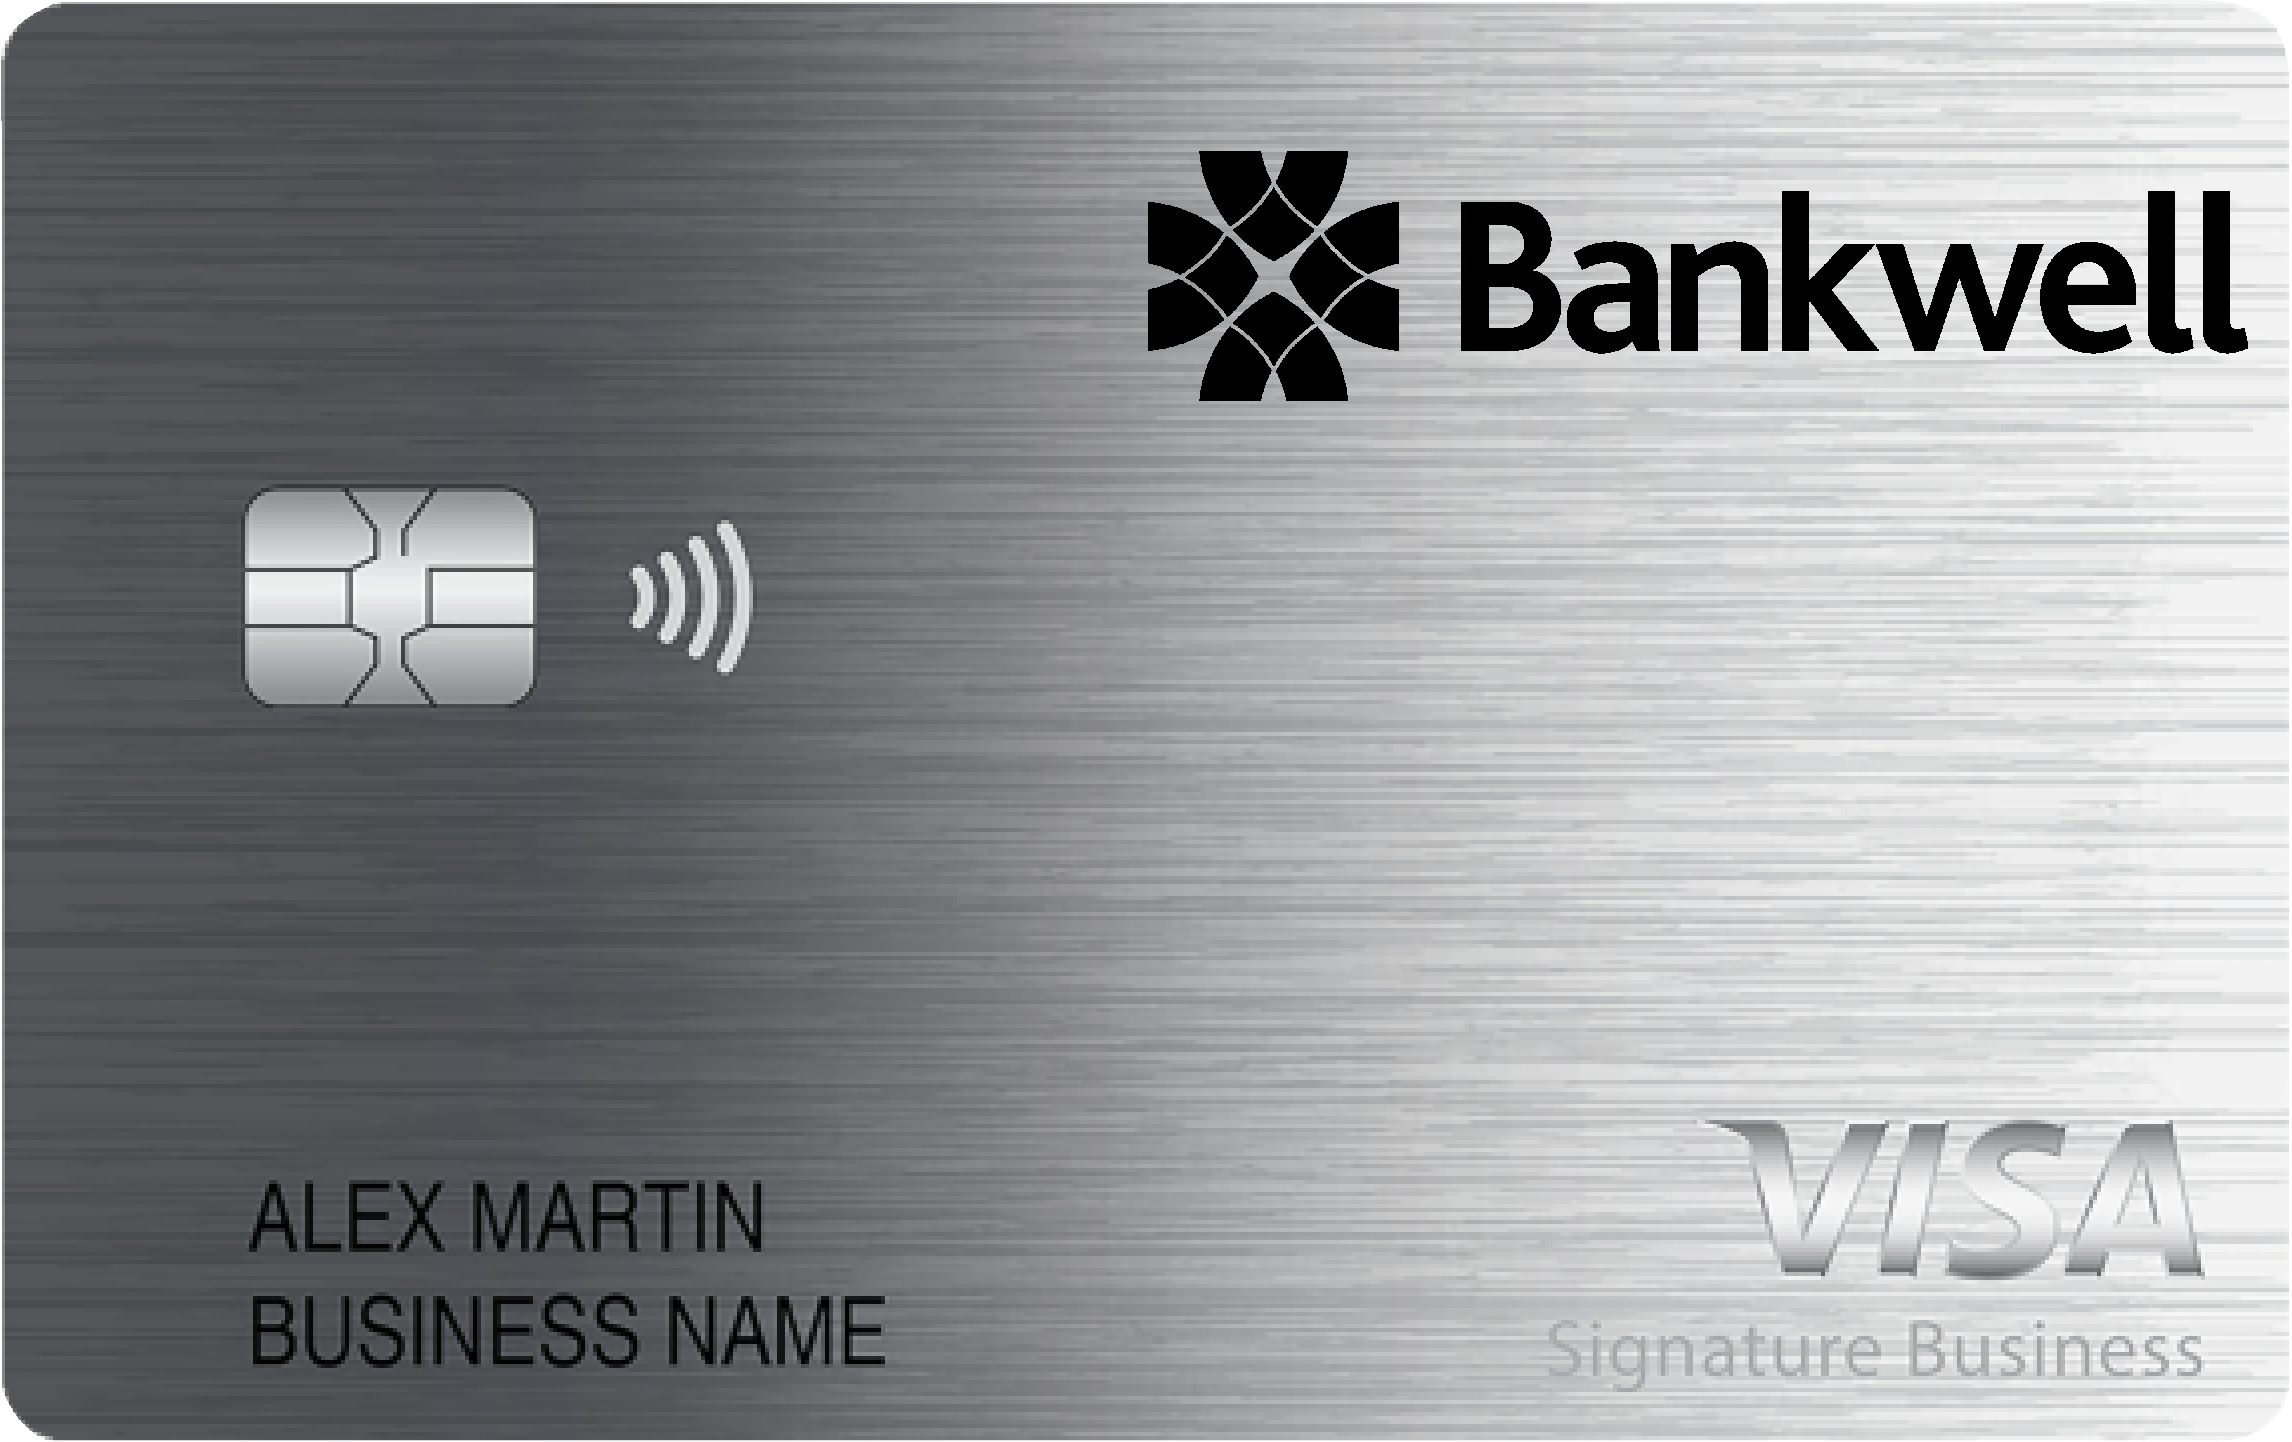 Bankwell Bank Smart Business Rewards Card